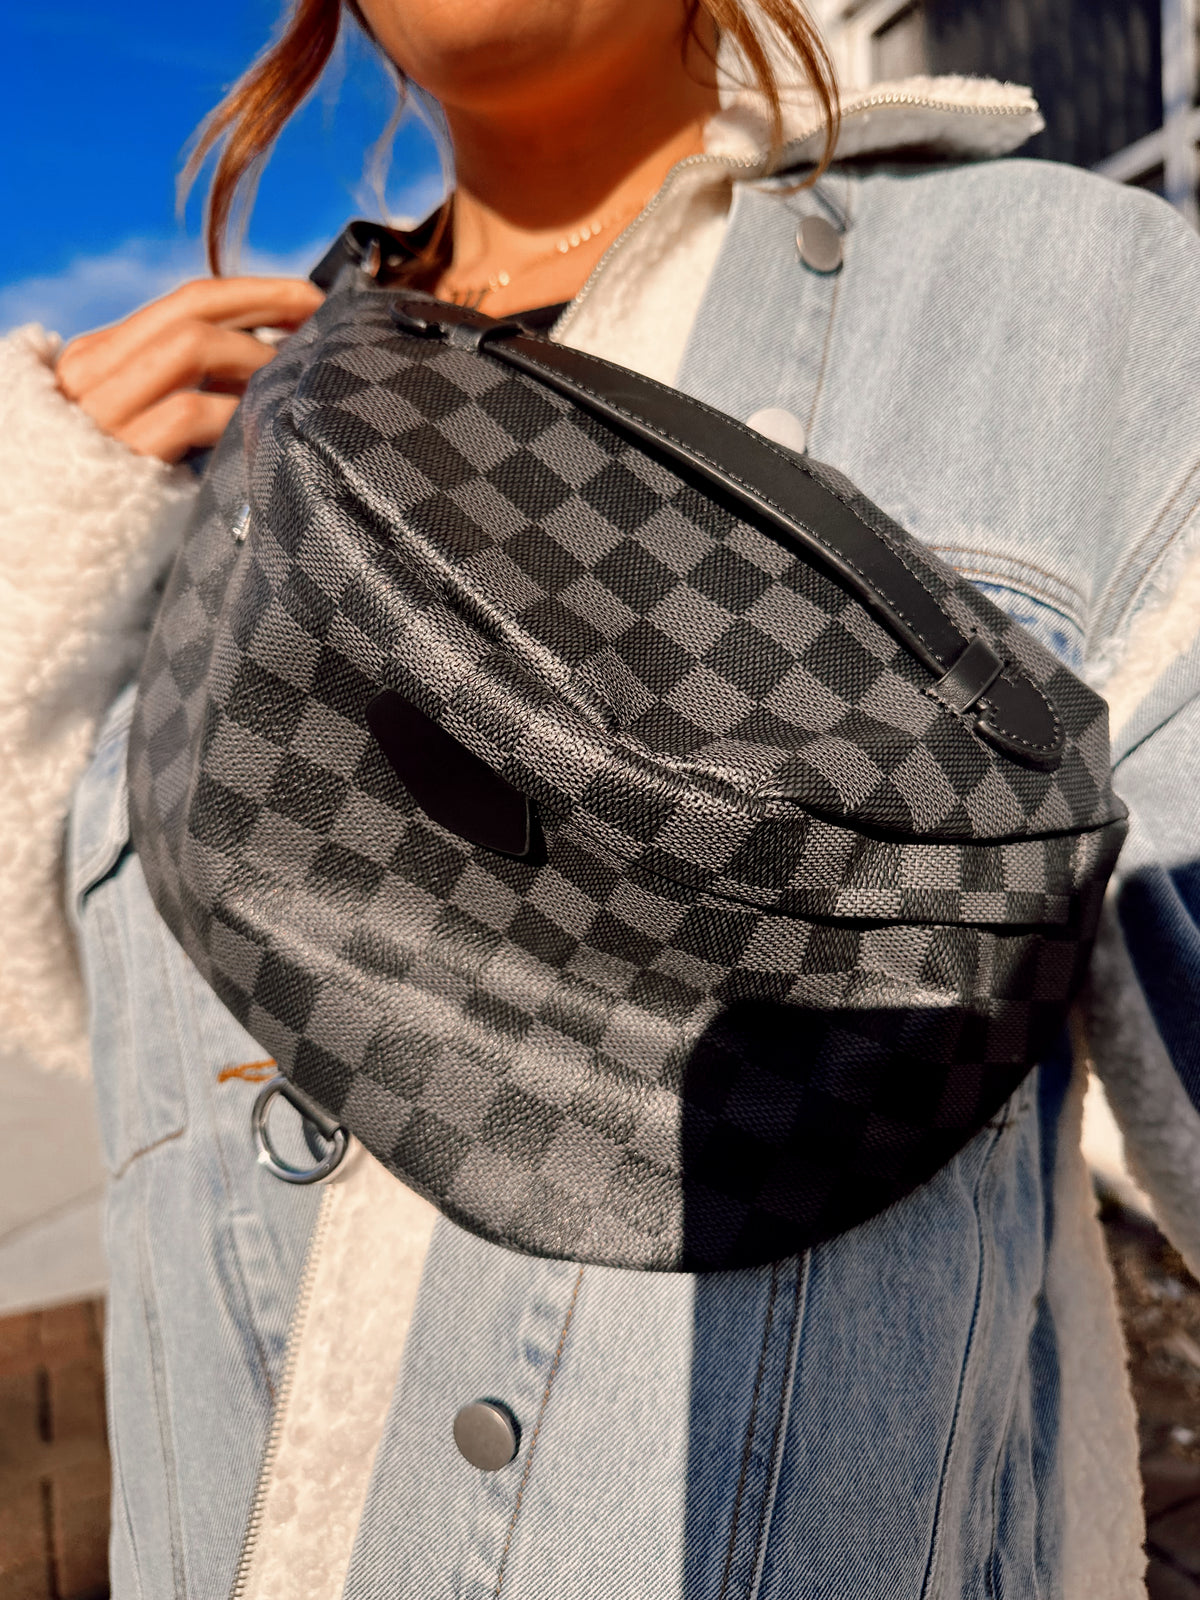 Checkered Bum Bag (black)